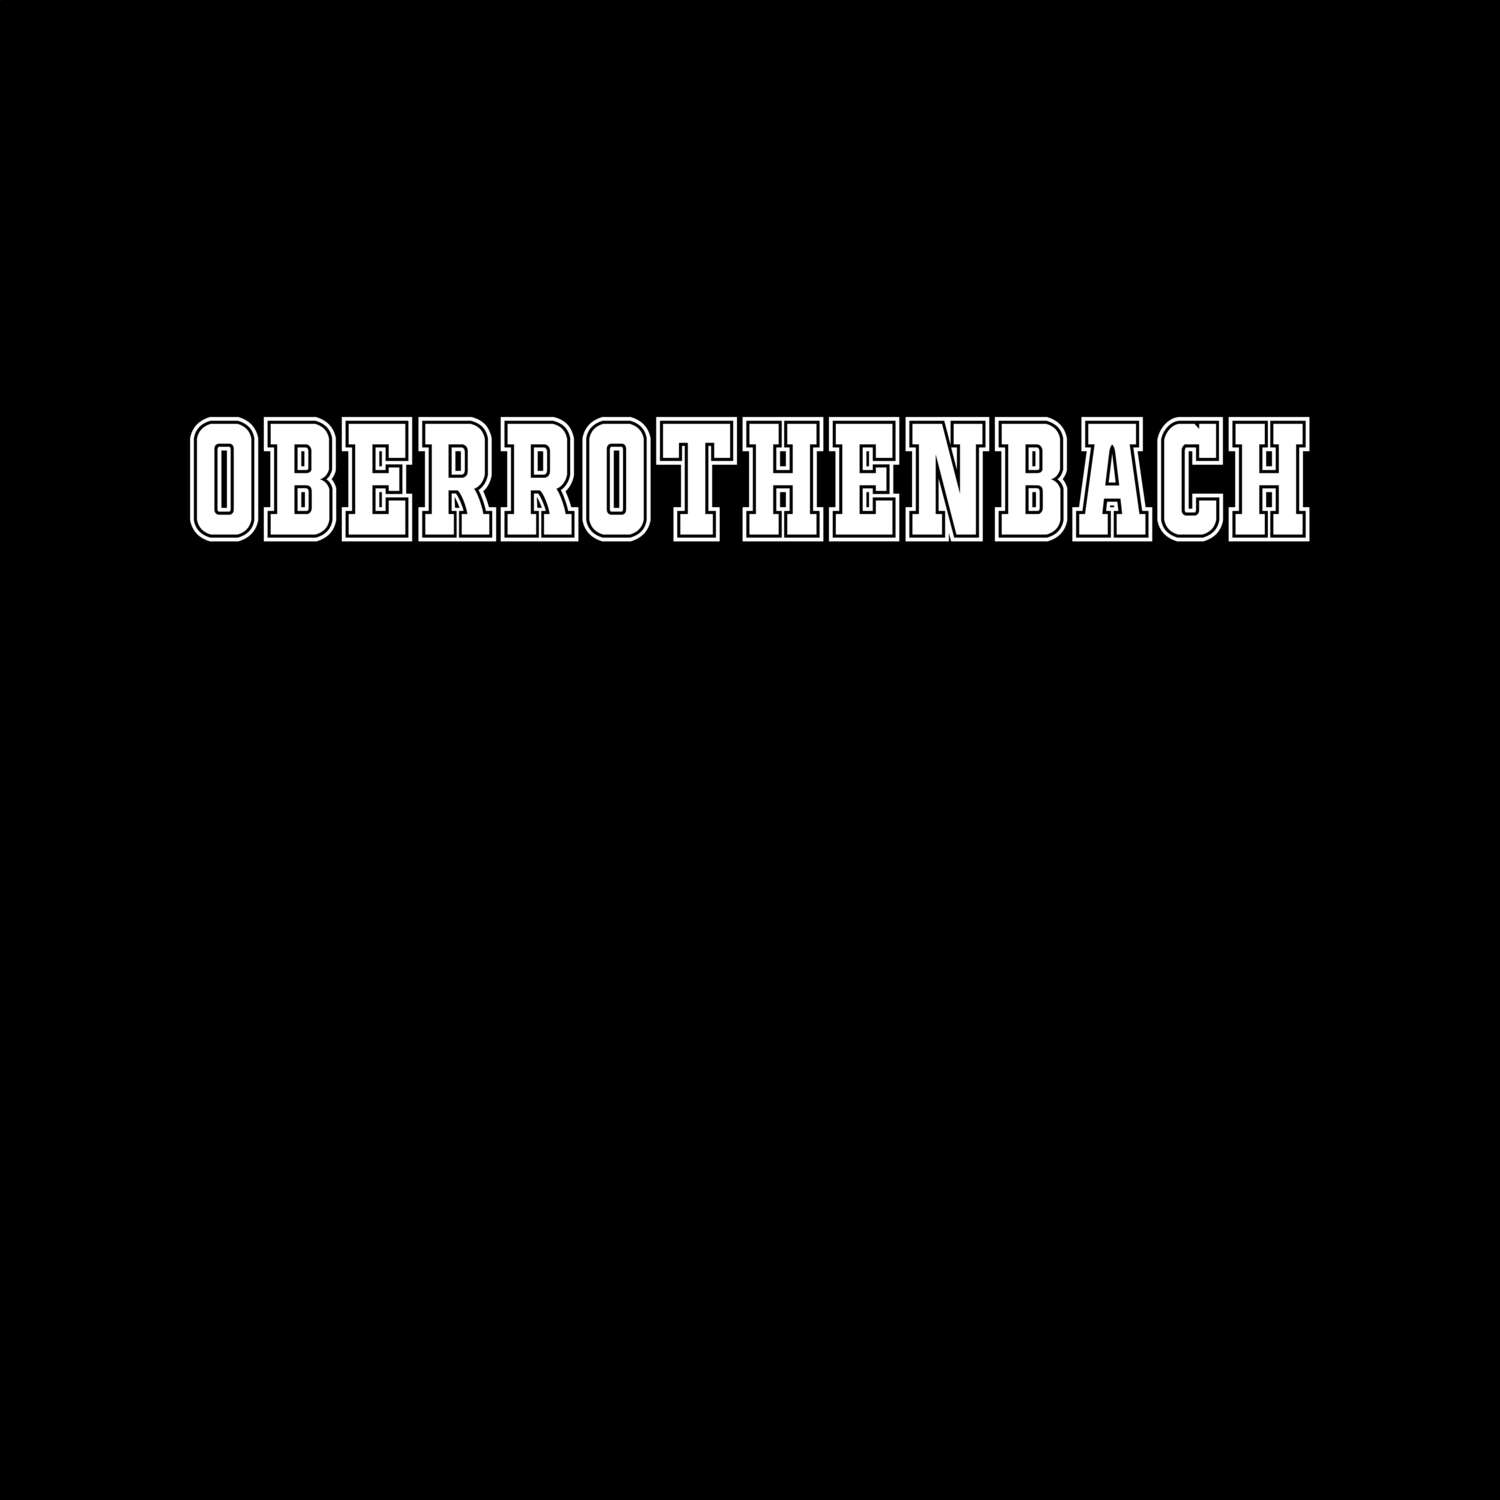 Oberrothenbach T-Shirt »Classic«